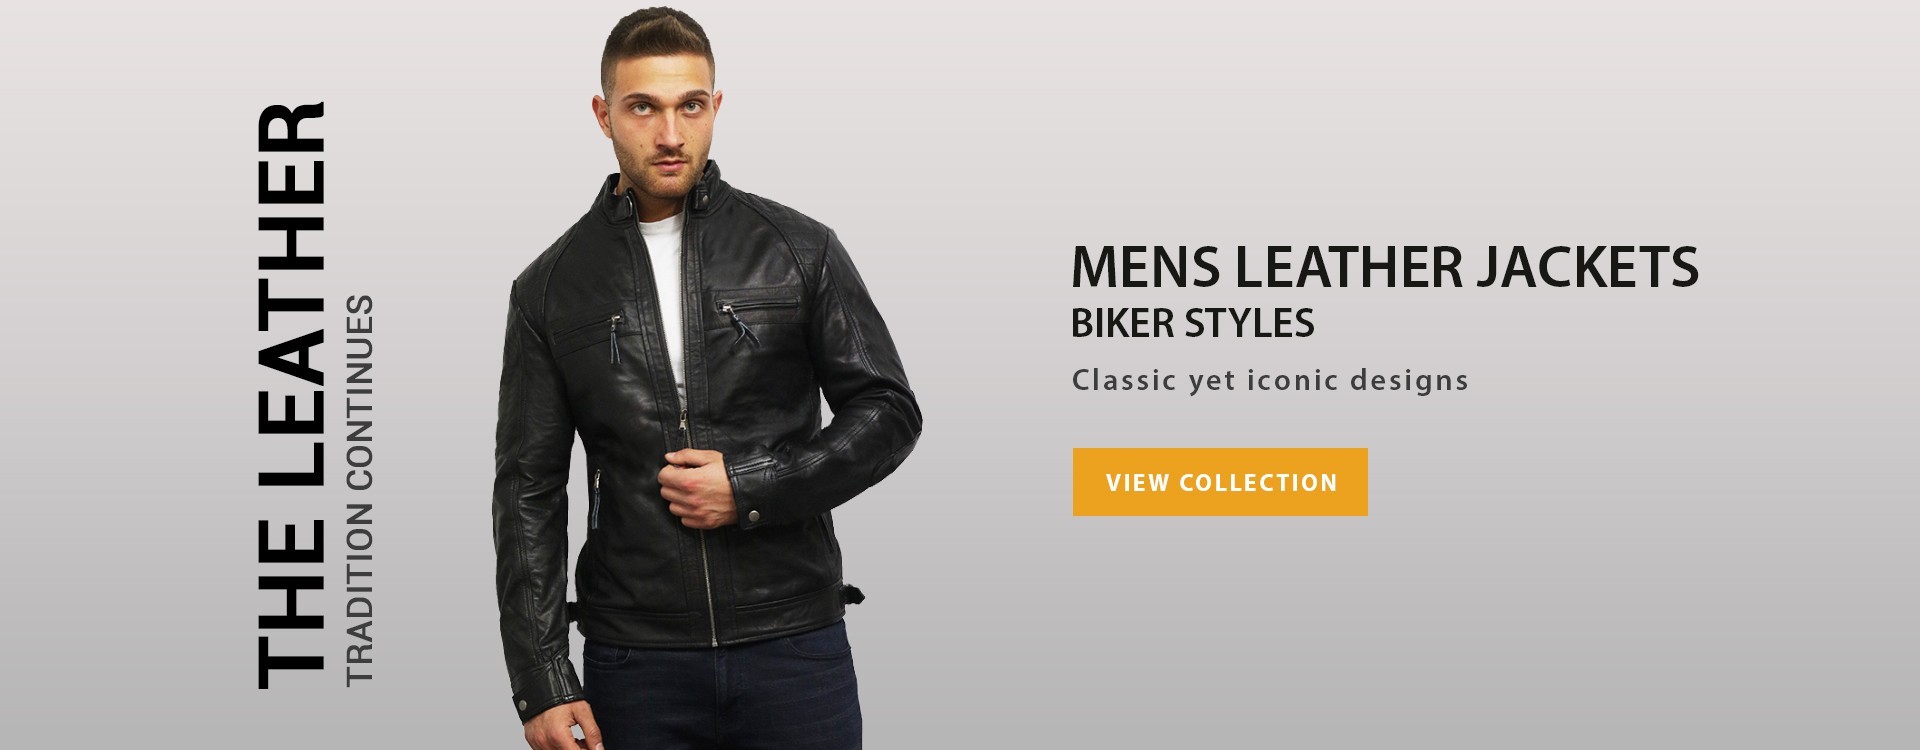 Leather jacket mens